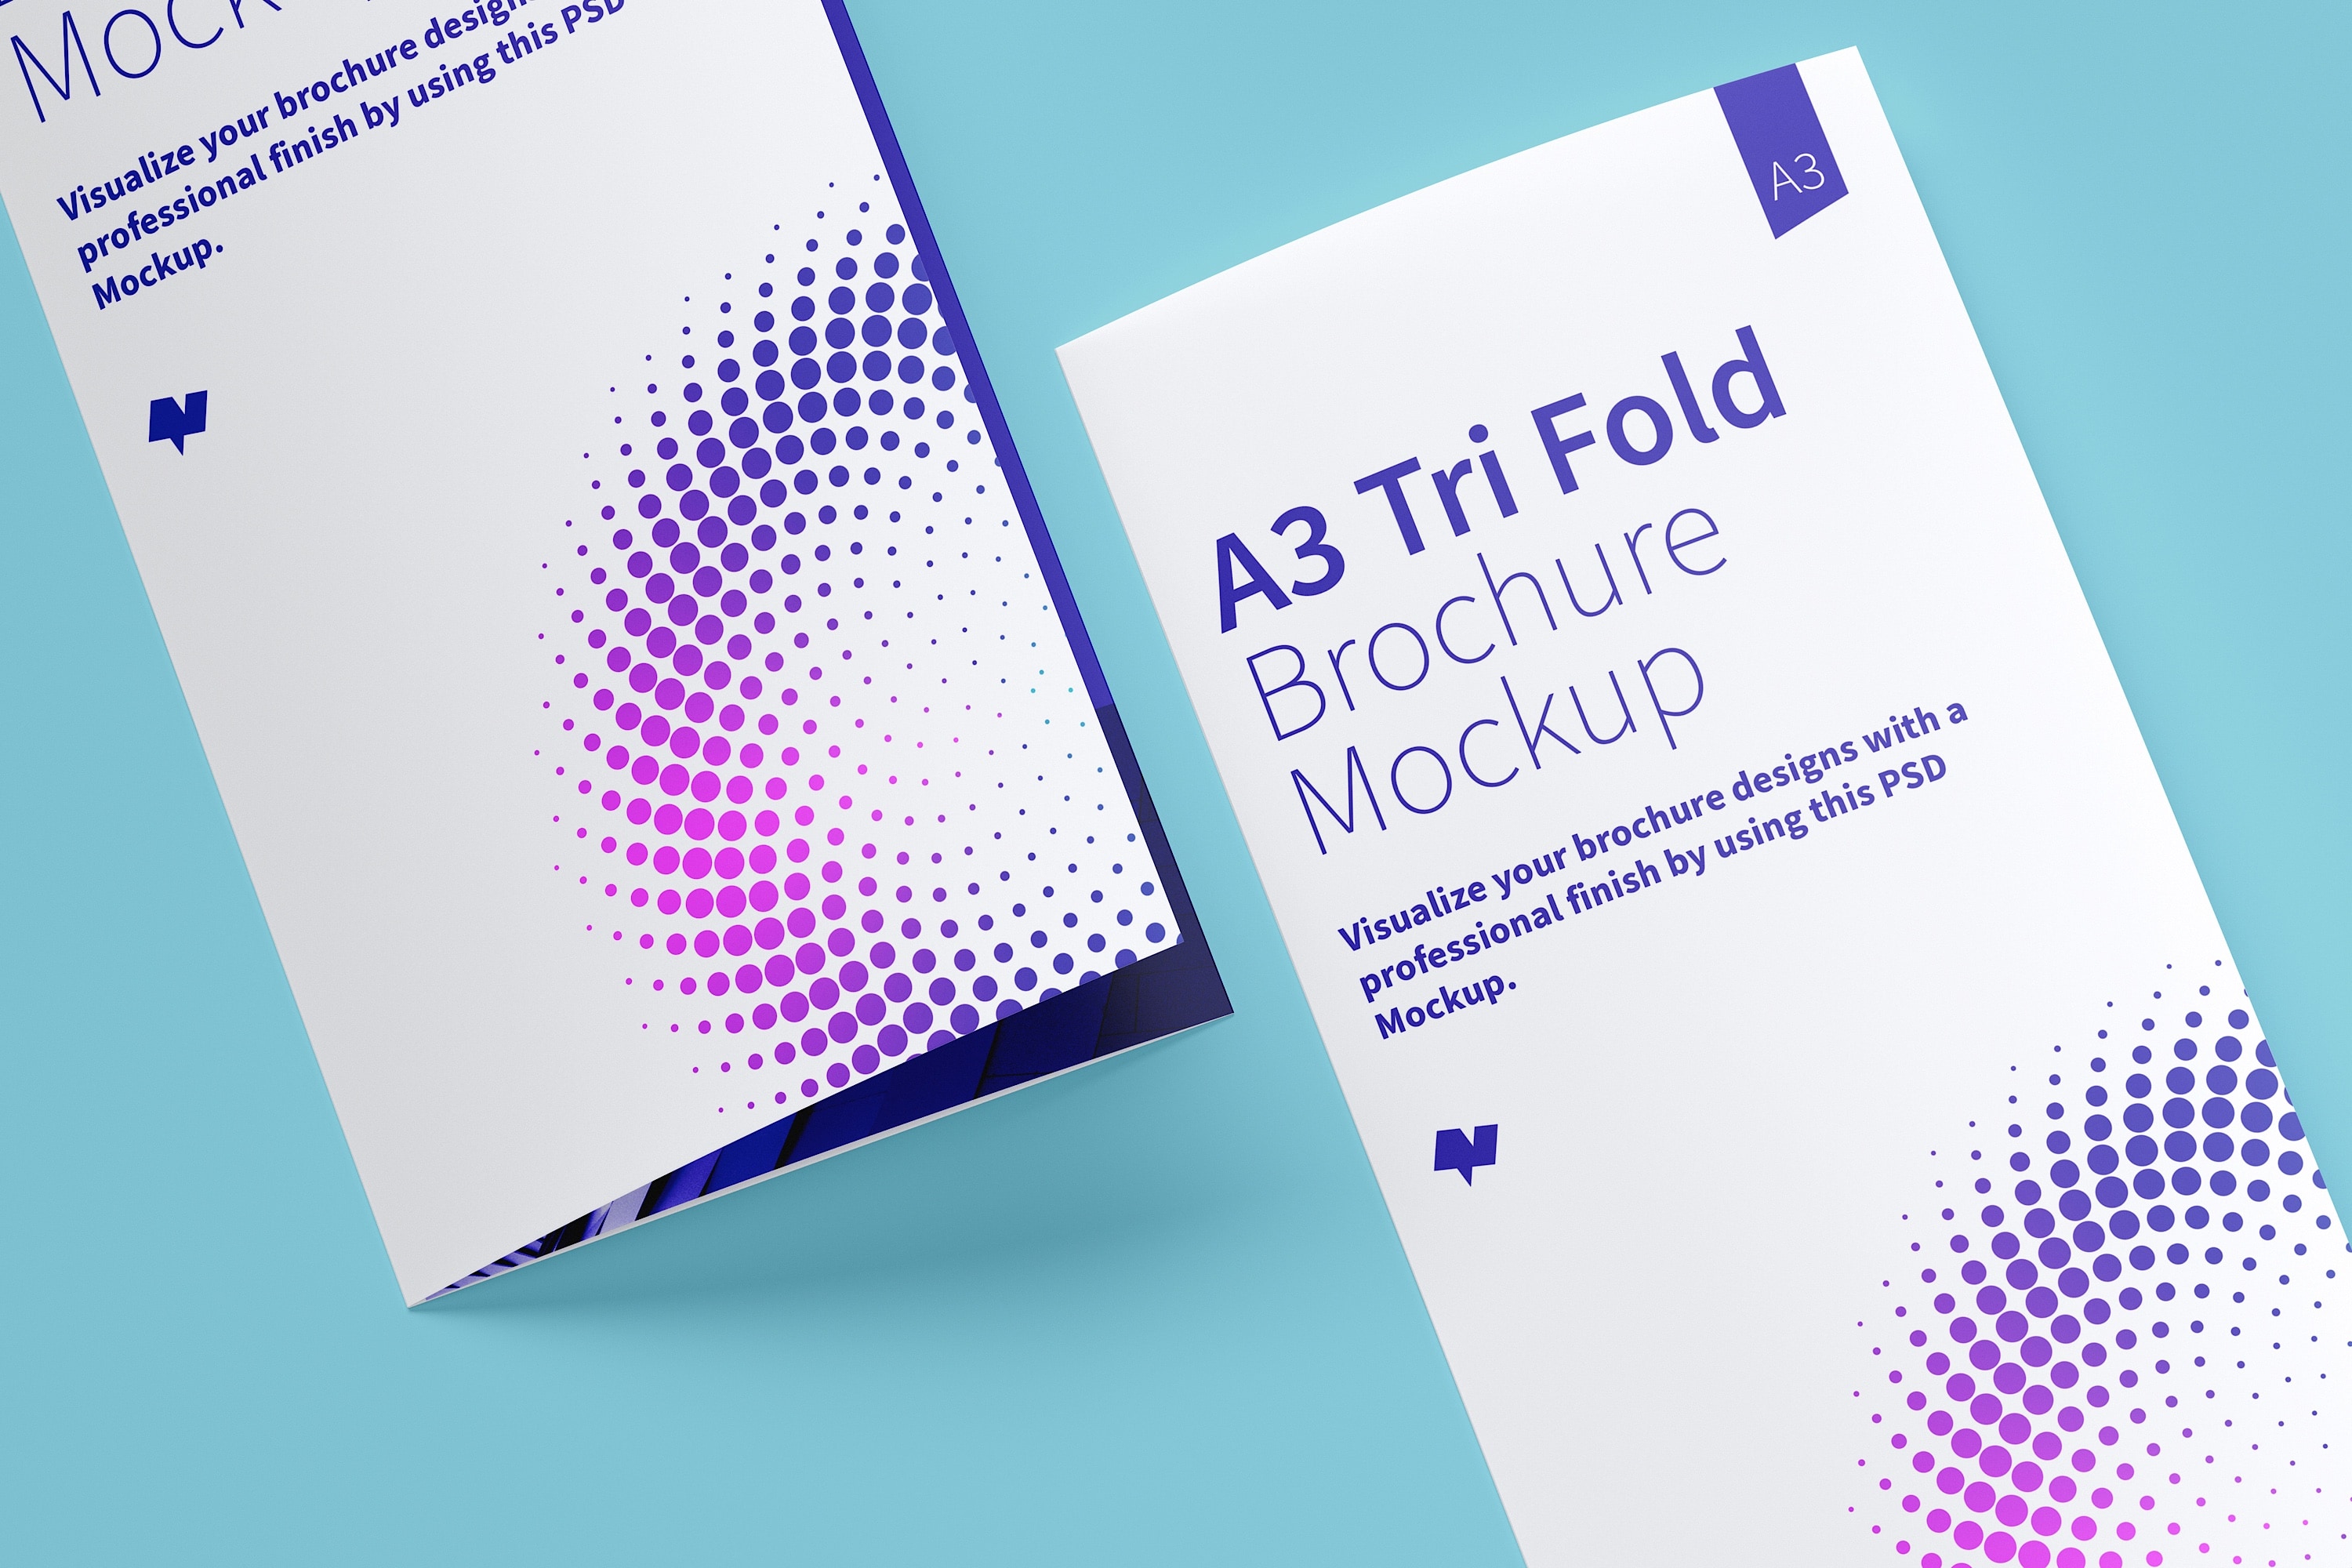 A3尺寸大小三折页传单小册子设计图预览样机05 A3 Trifold Brochure Mockup 05插图(4)